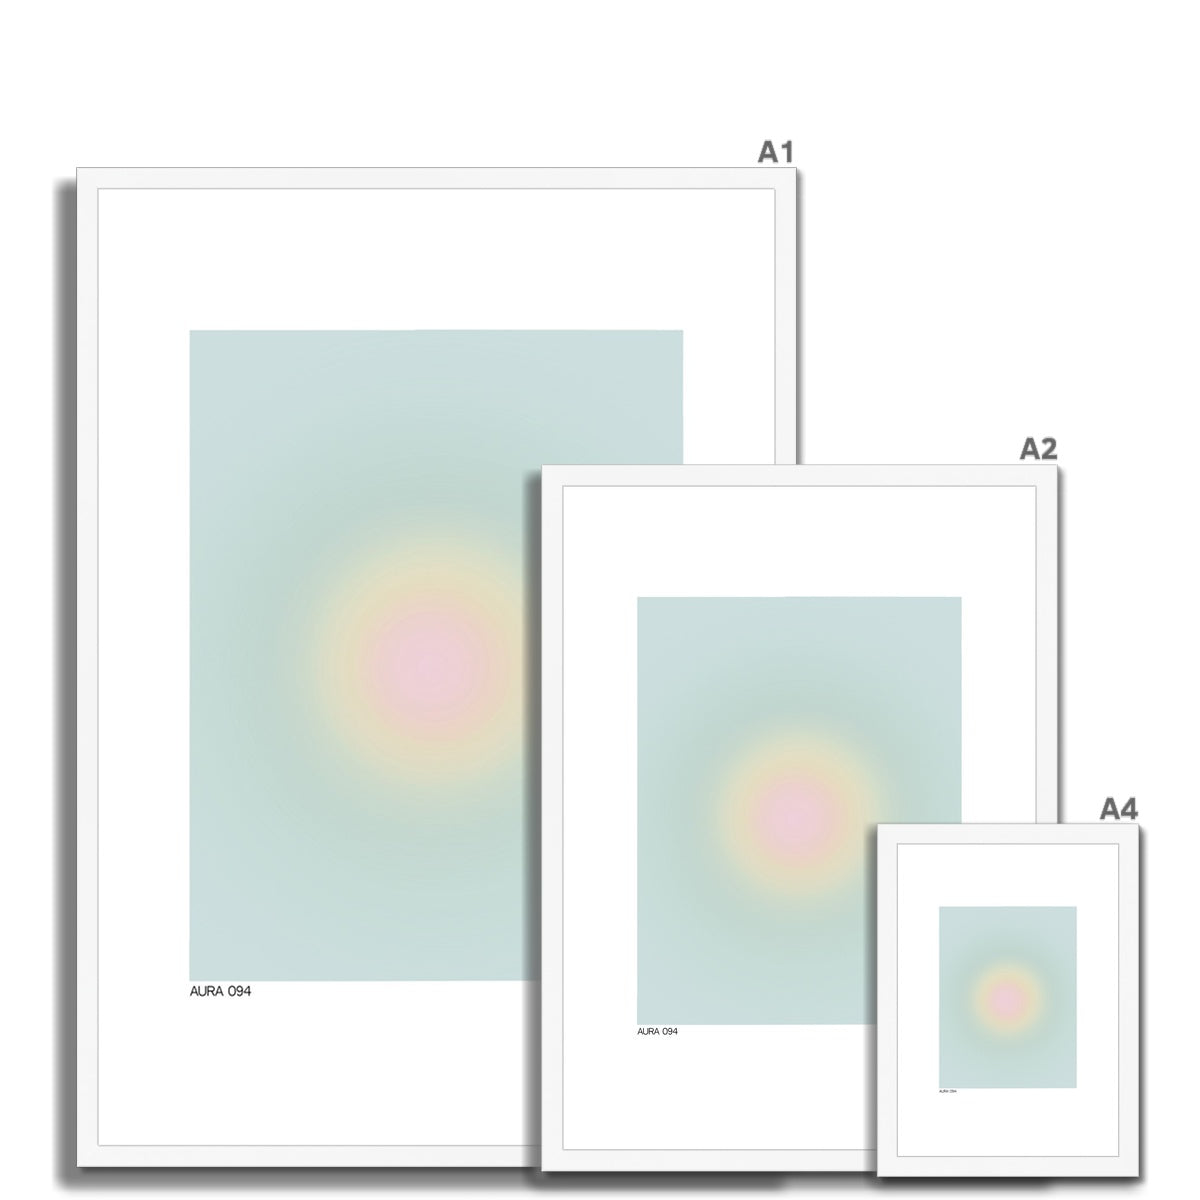 aura 094 Framed & Mounted Print